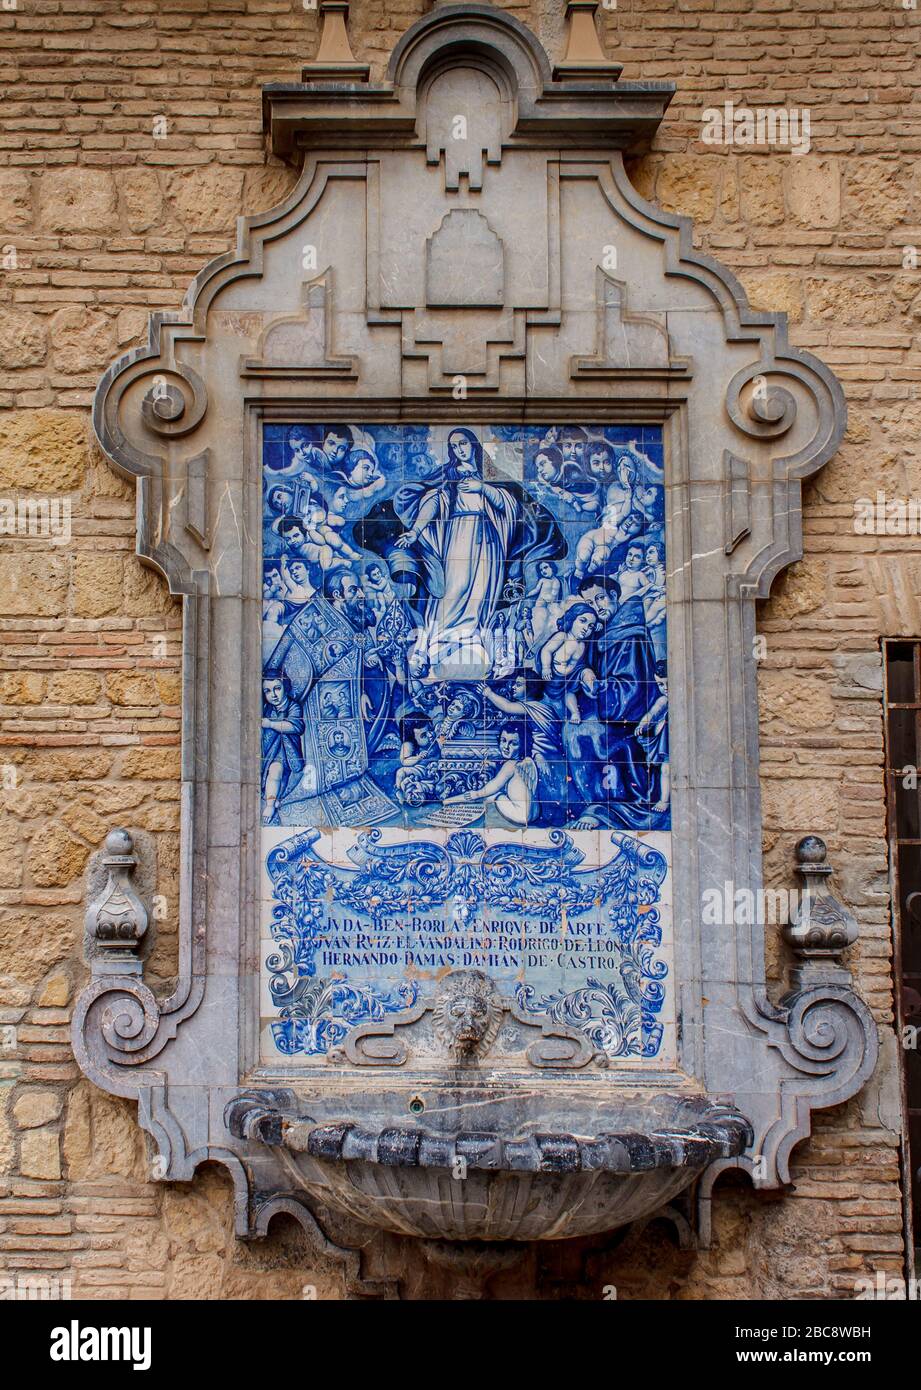 Cordoba, Andalusia, Spain  - 15 May 2013: Mosaic tile icon ceramic decoration on mosaic on the wall of Iglesia de San Francisco. Stock Photo